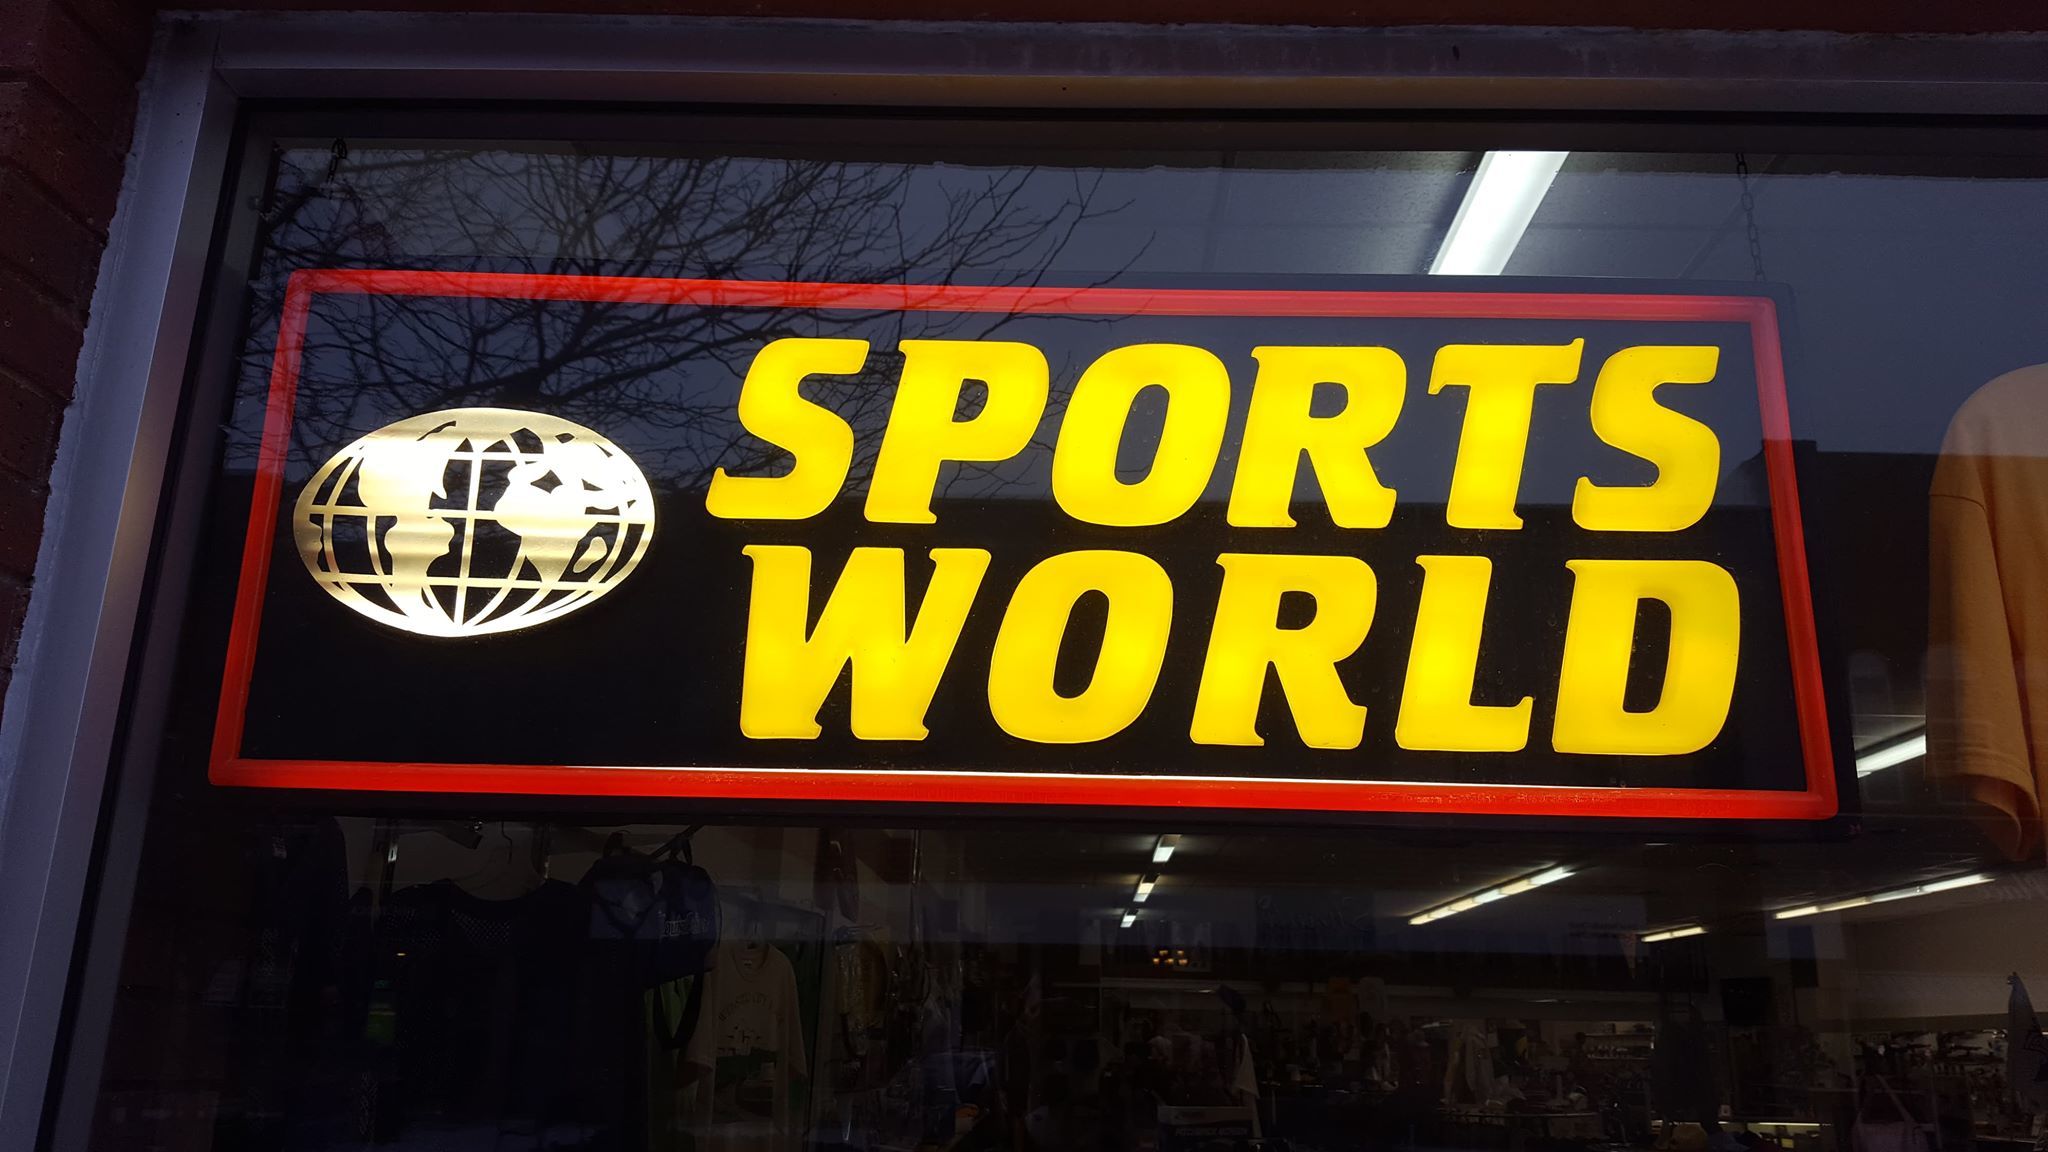 Sports World